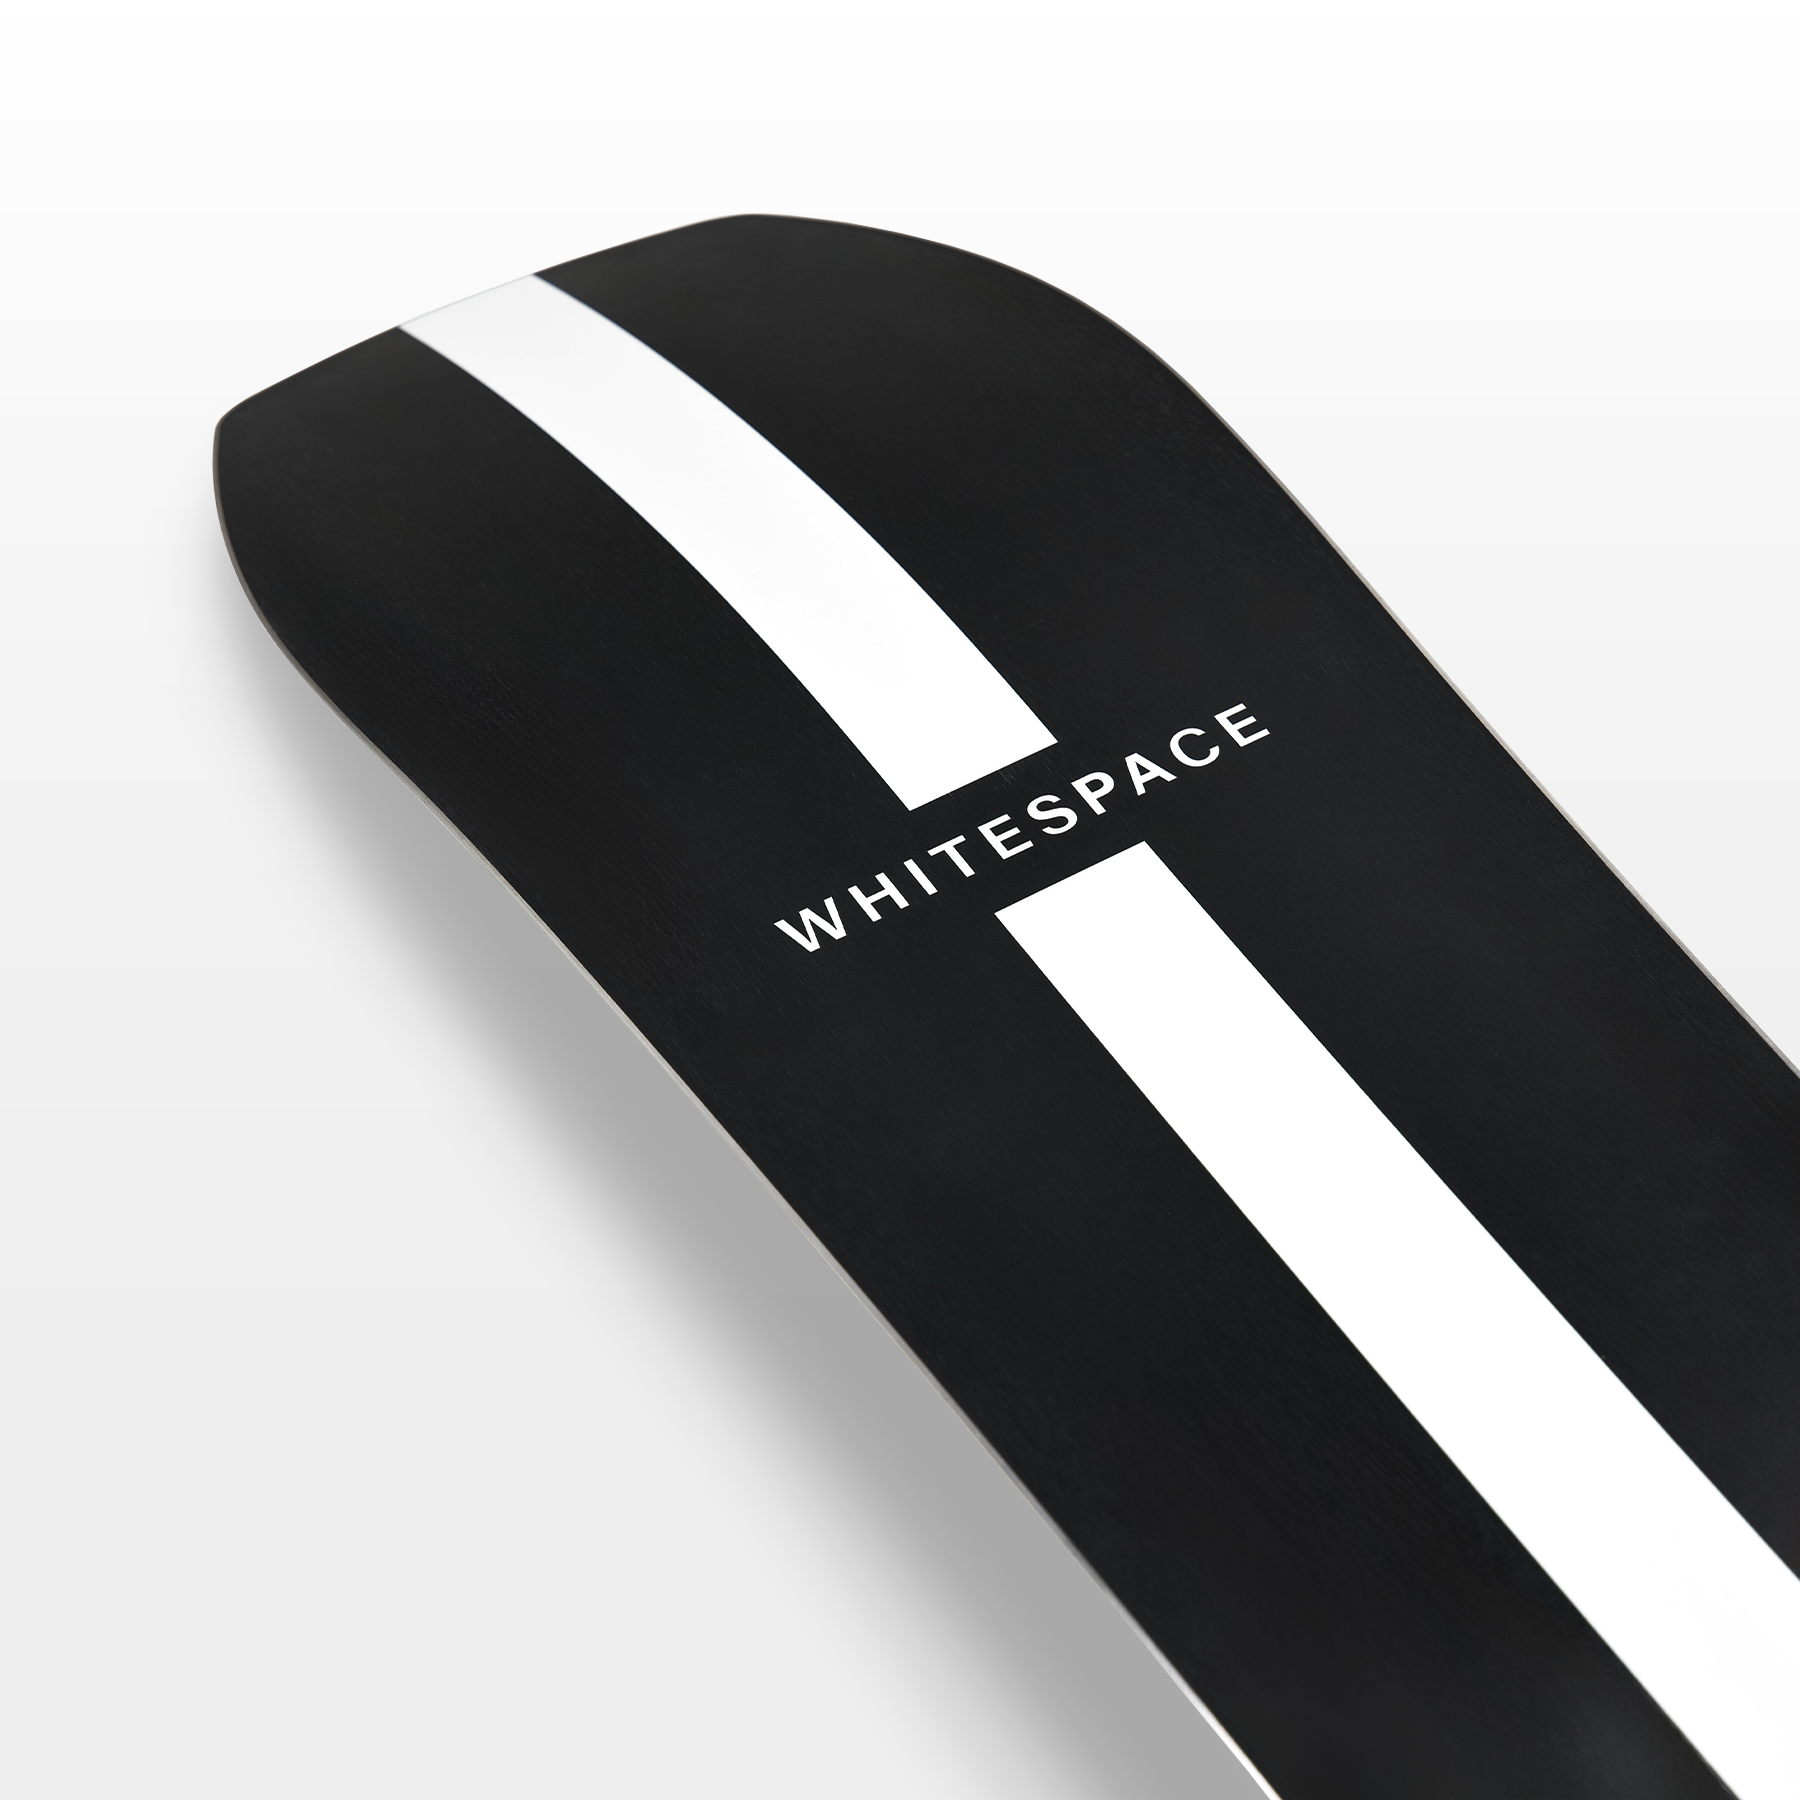 Shaun White Launches Active Lifestyle Brand 'Whitespace